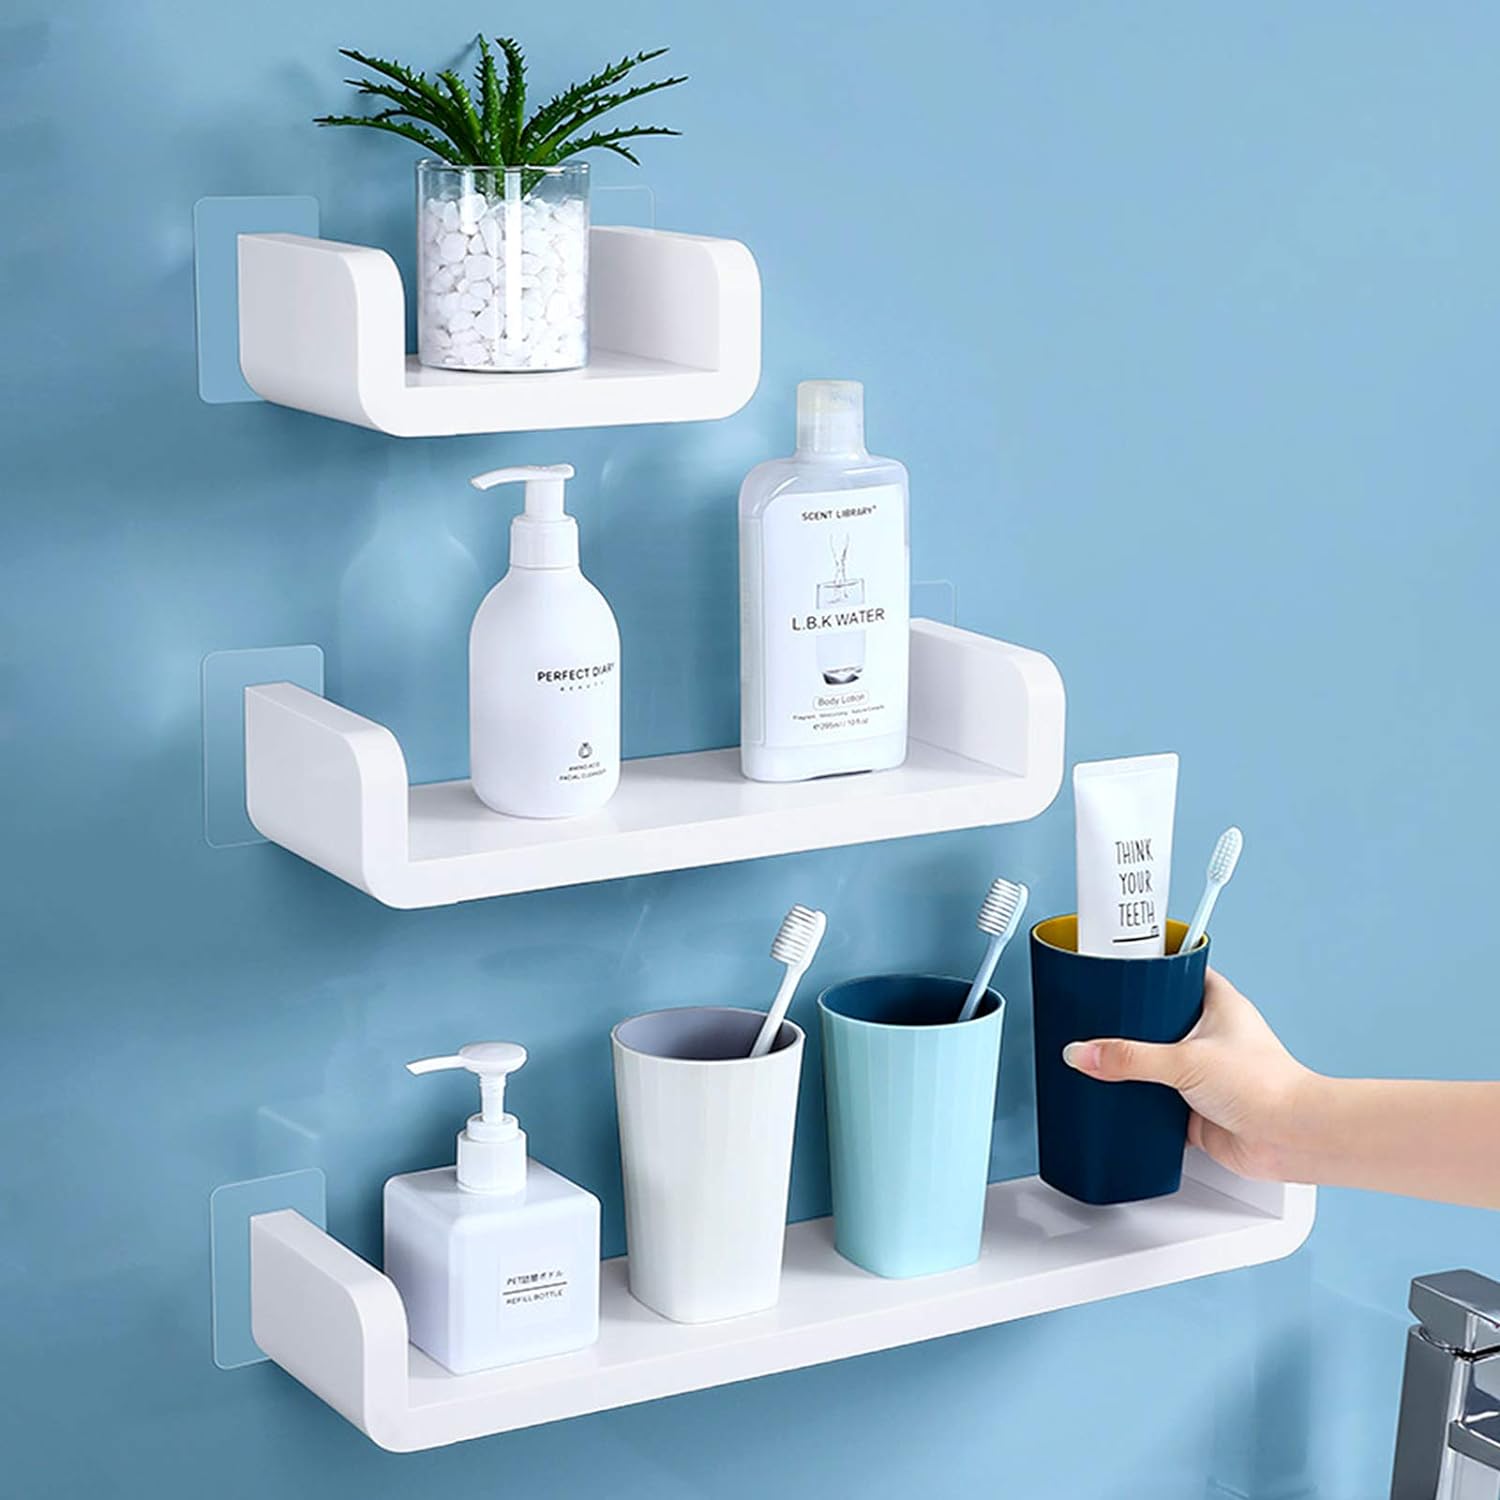 Laigoo Adhesive Floating Shelves Non-Drilling, Set of 3, Display Picture  Ledge Shelf U Bathroom Shelf Organizer for Home/Wall Decor/Ki